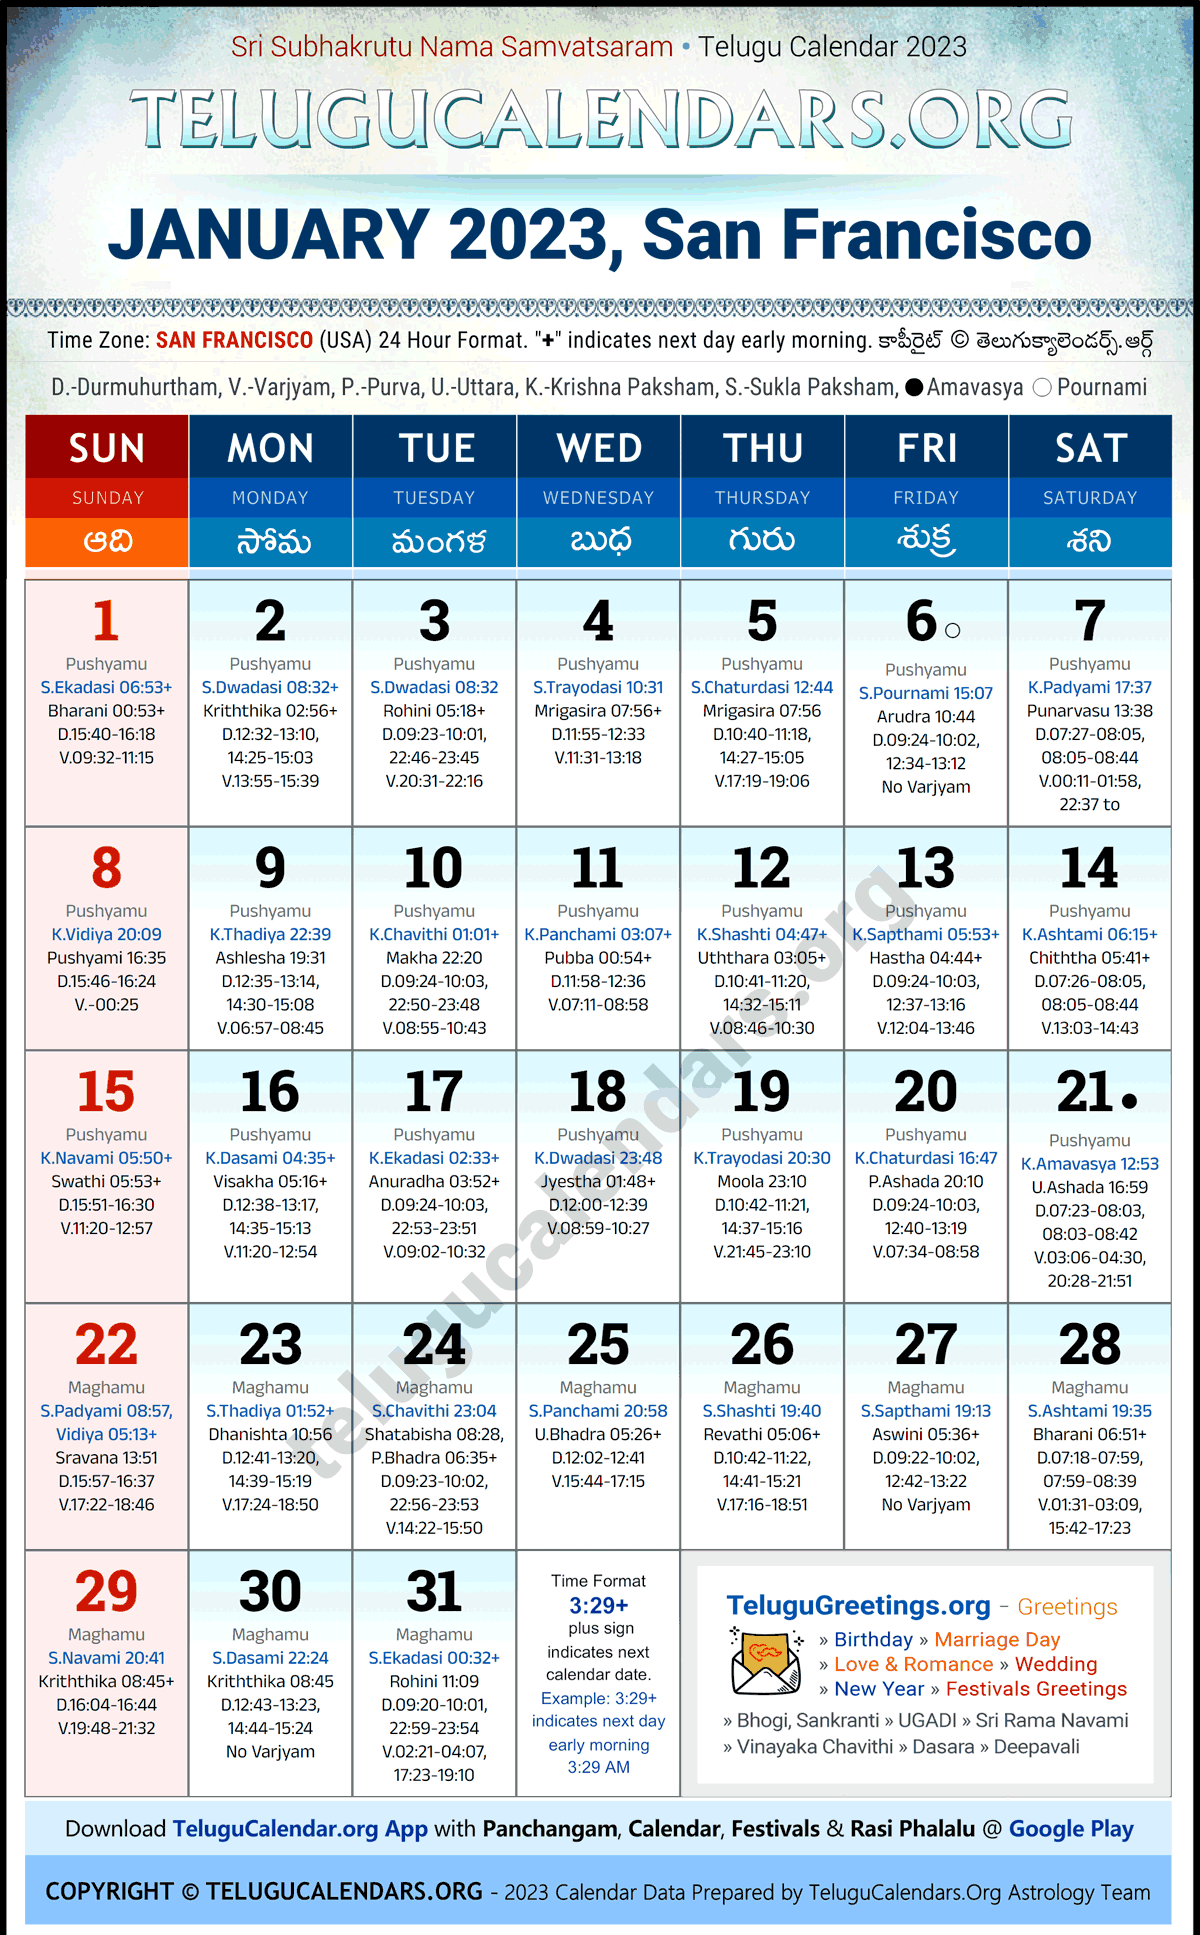 Telugu Calendar 2023 January Festivals for San Francisco